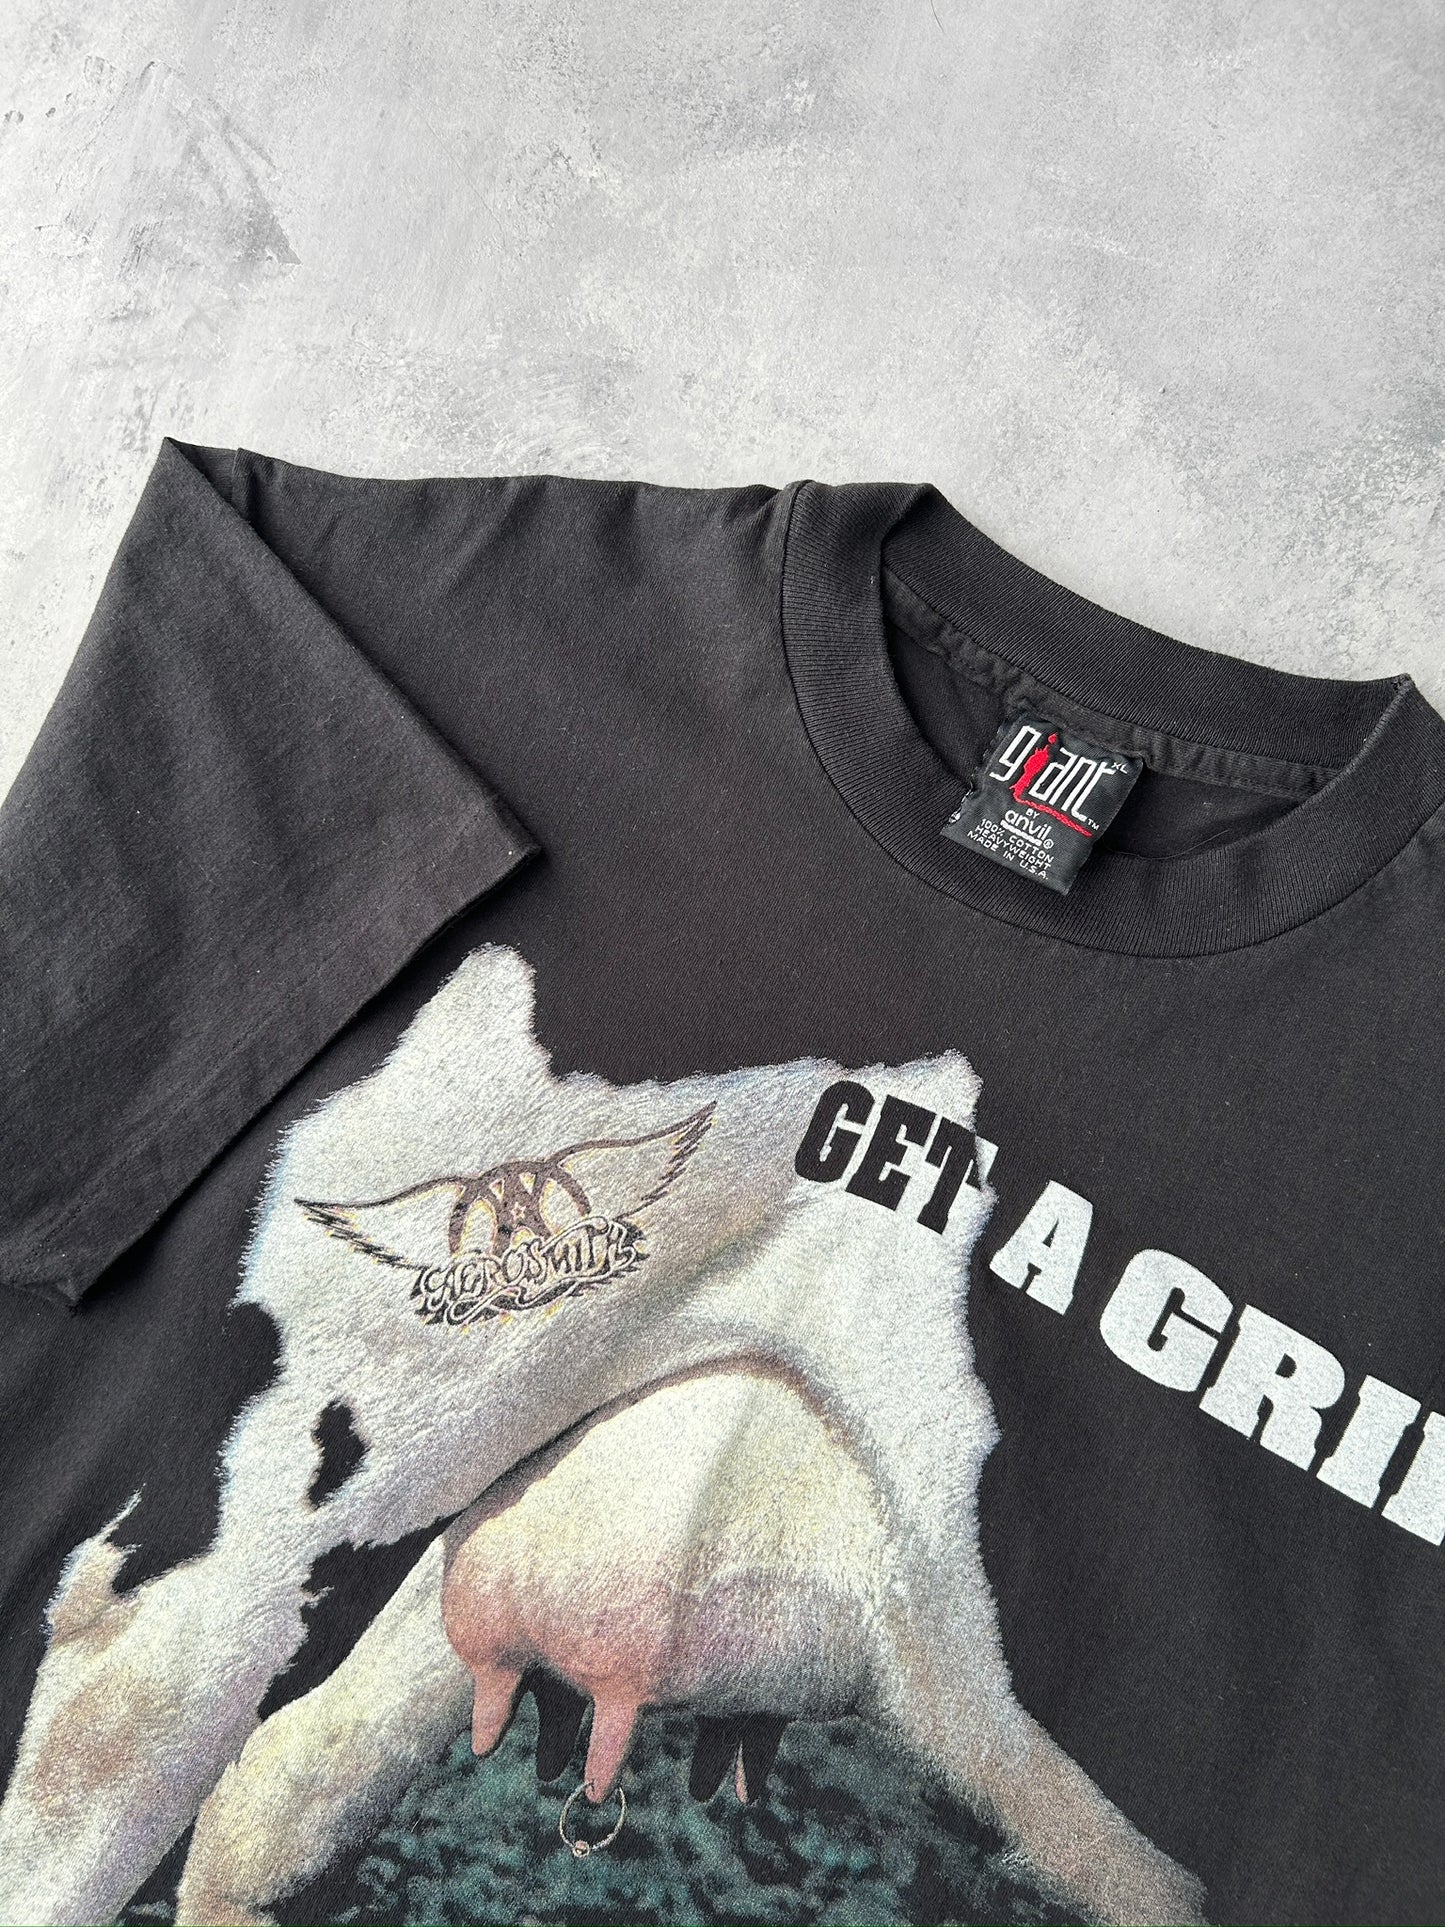 Aerosmith Get a Grip Album T-Shirt '93 - XL